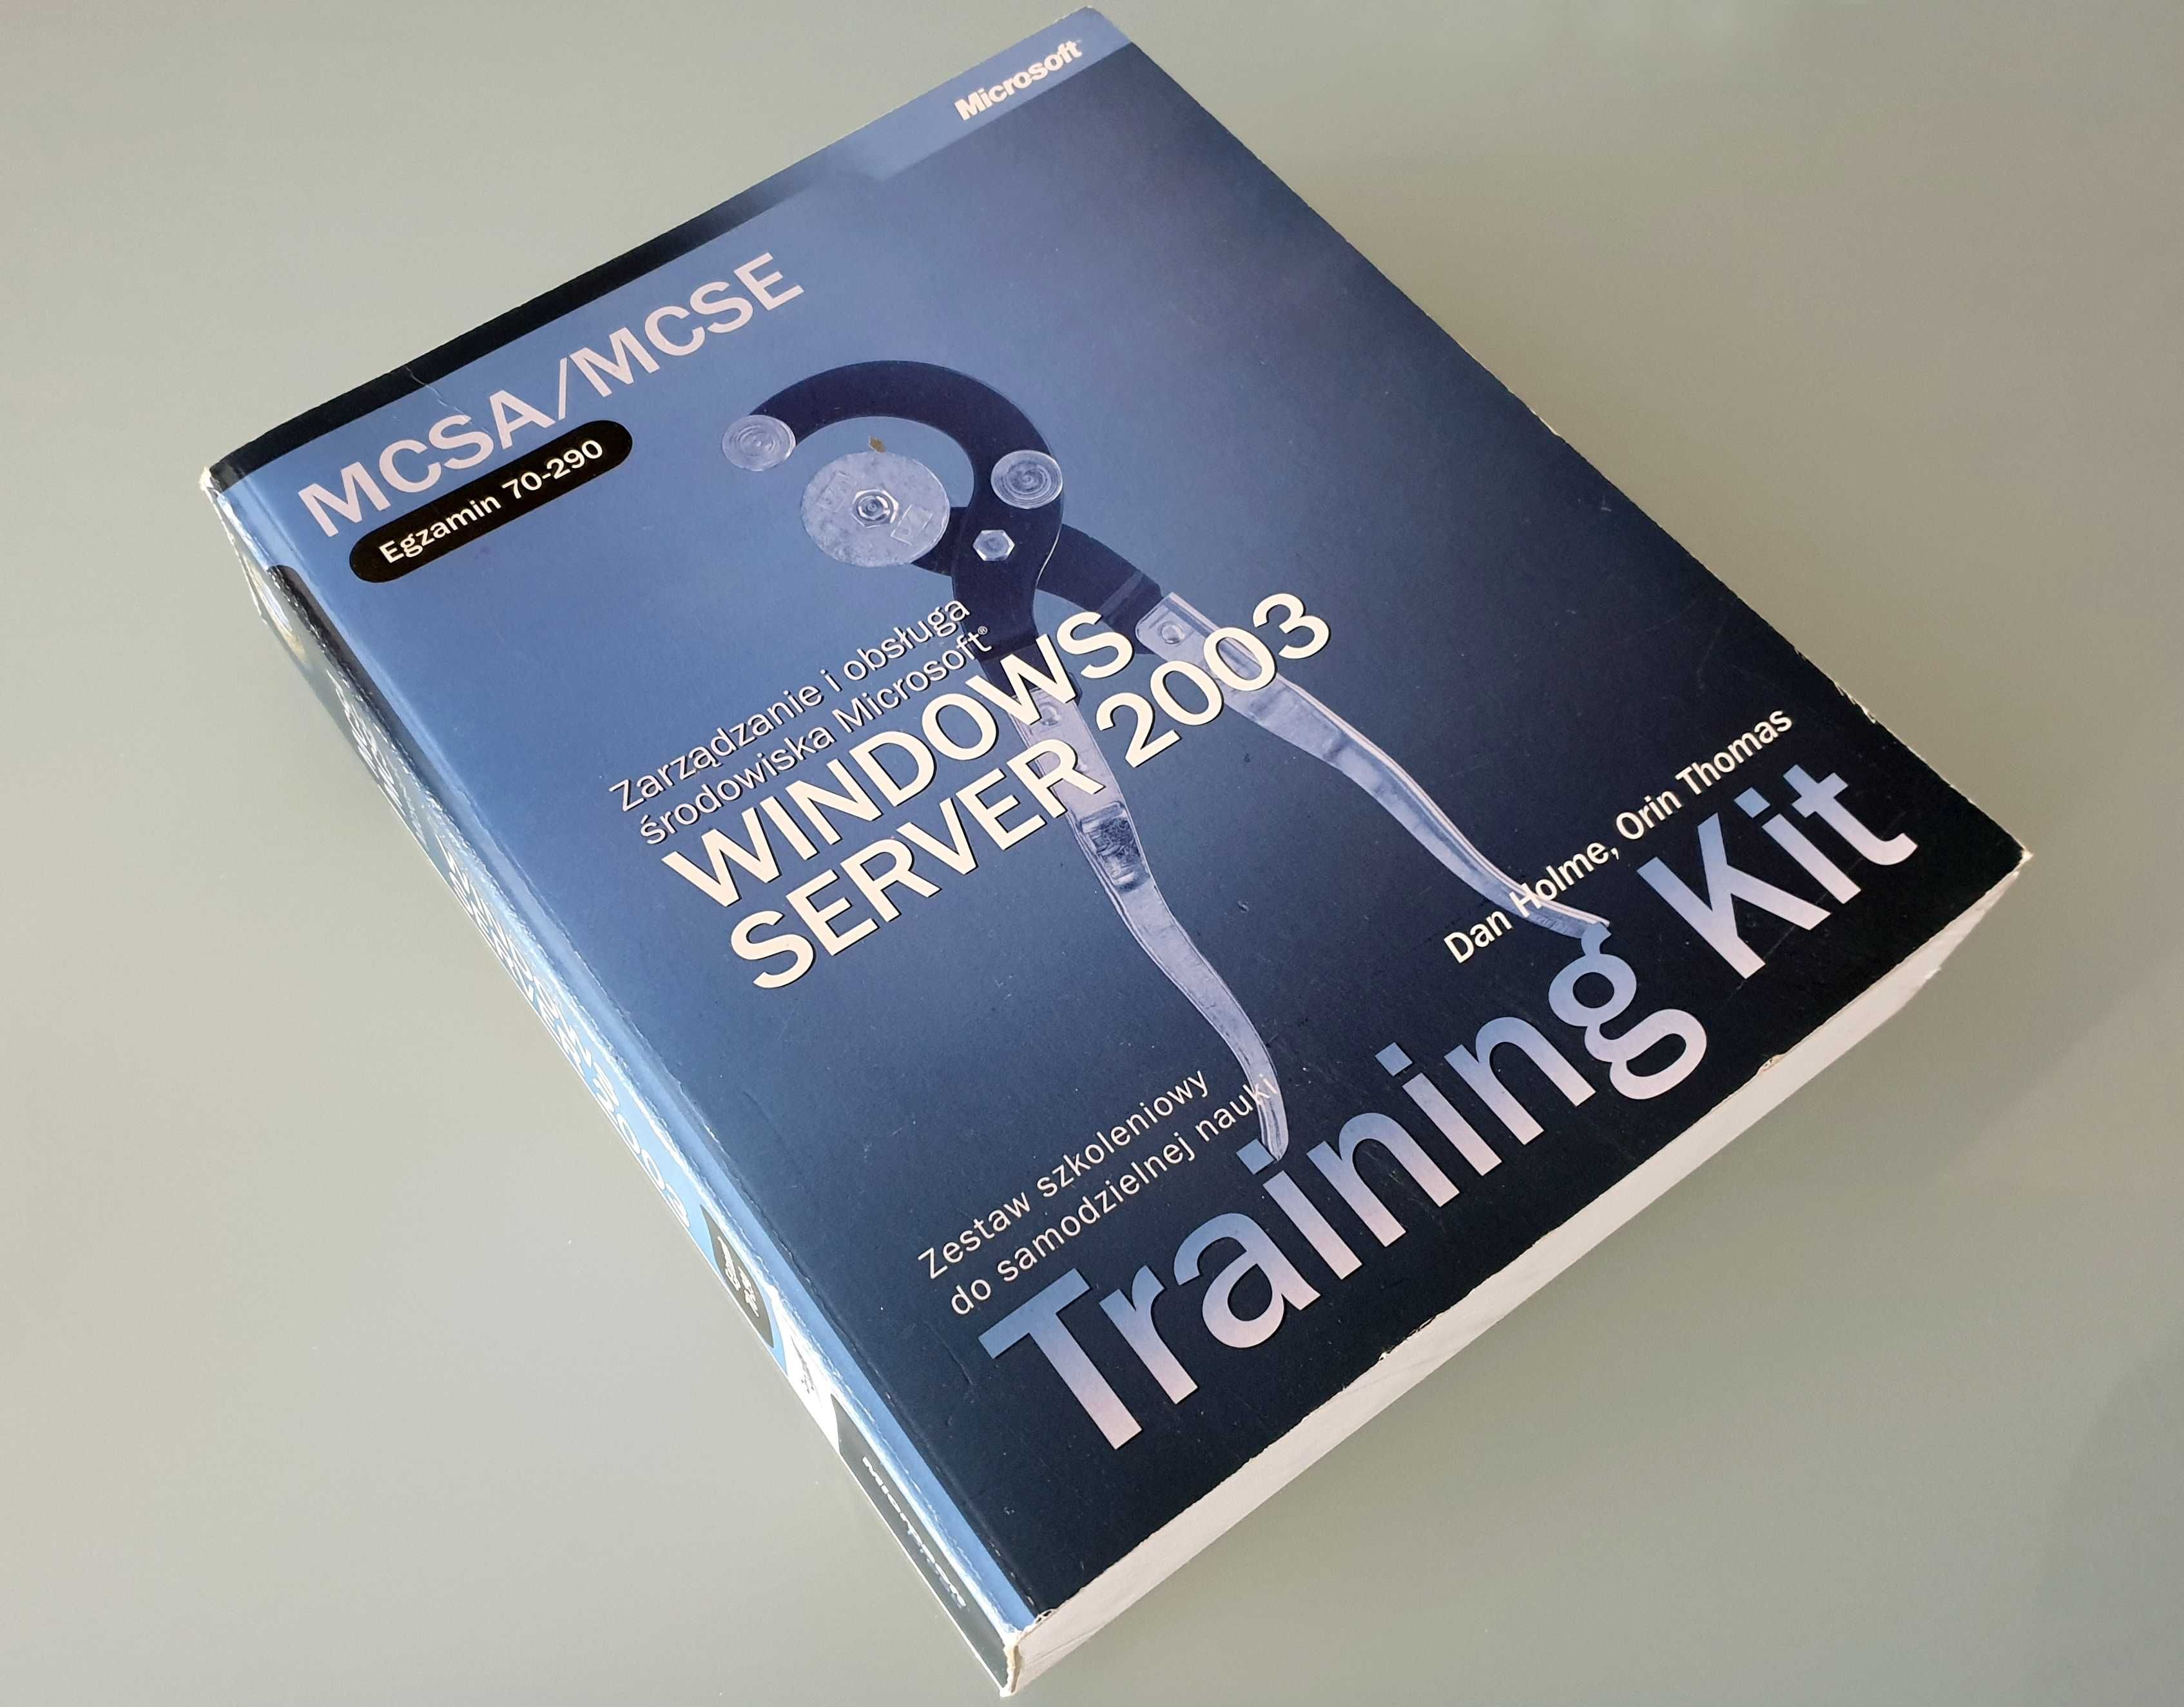 Dan Holme, Orin Thomas - Windows Server 2003 - Training Kit